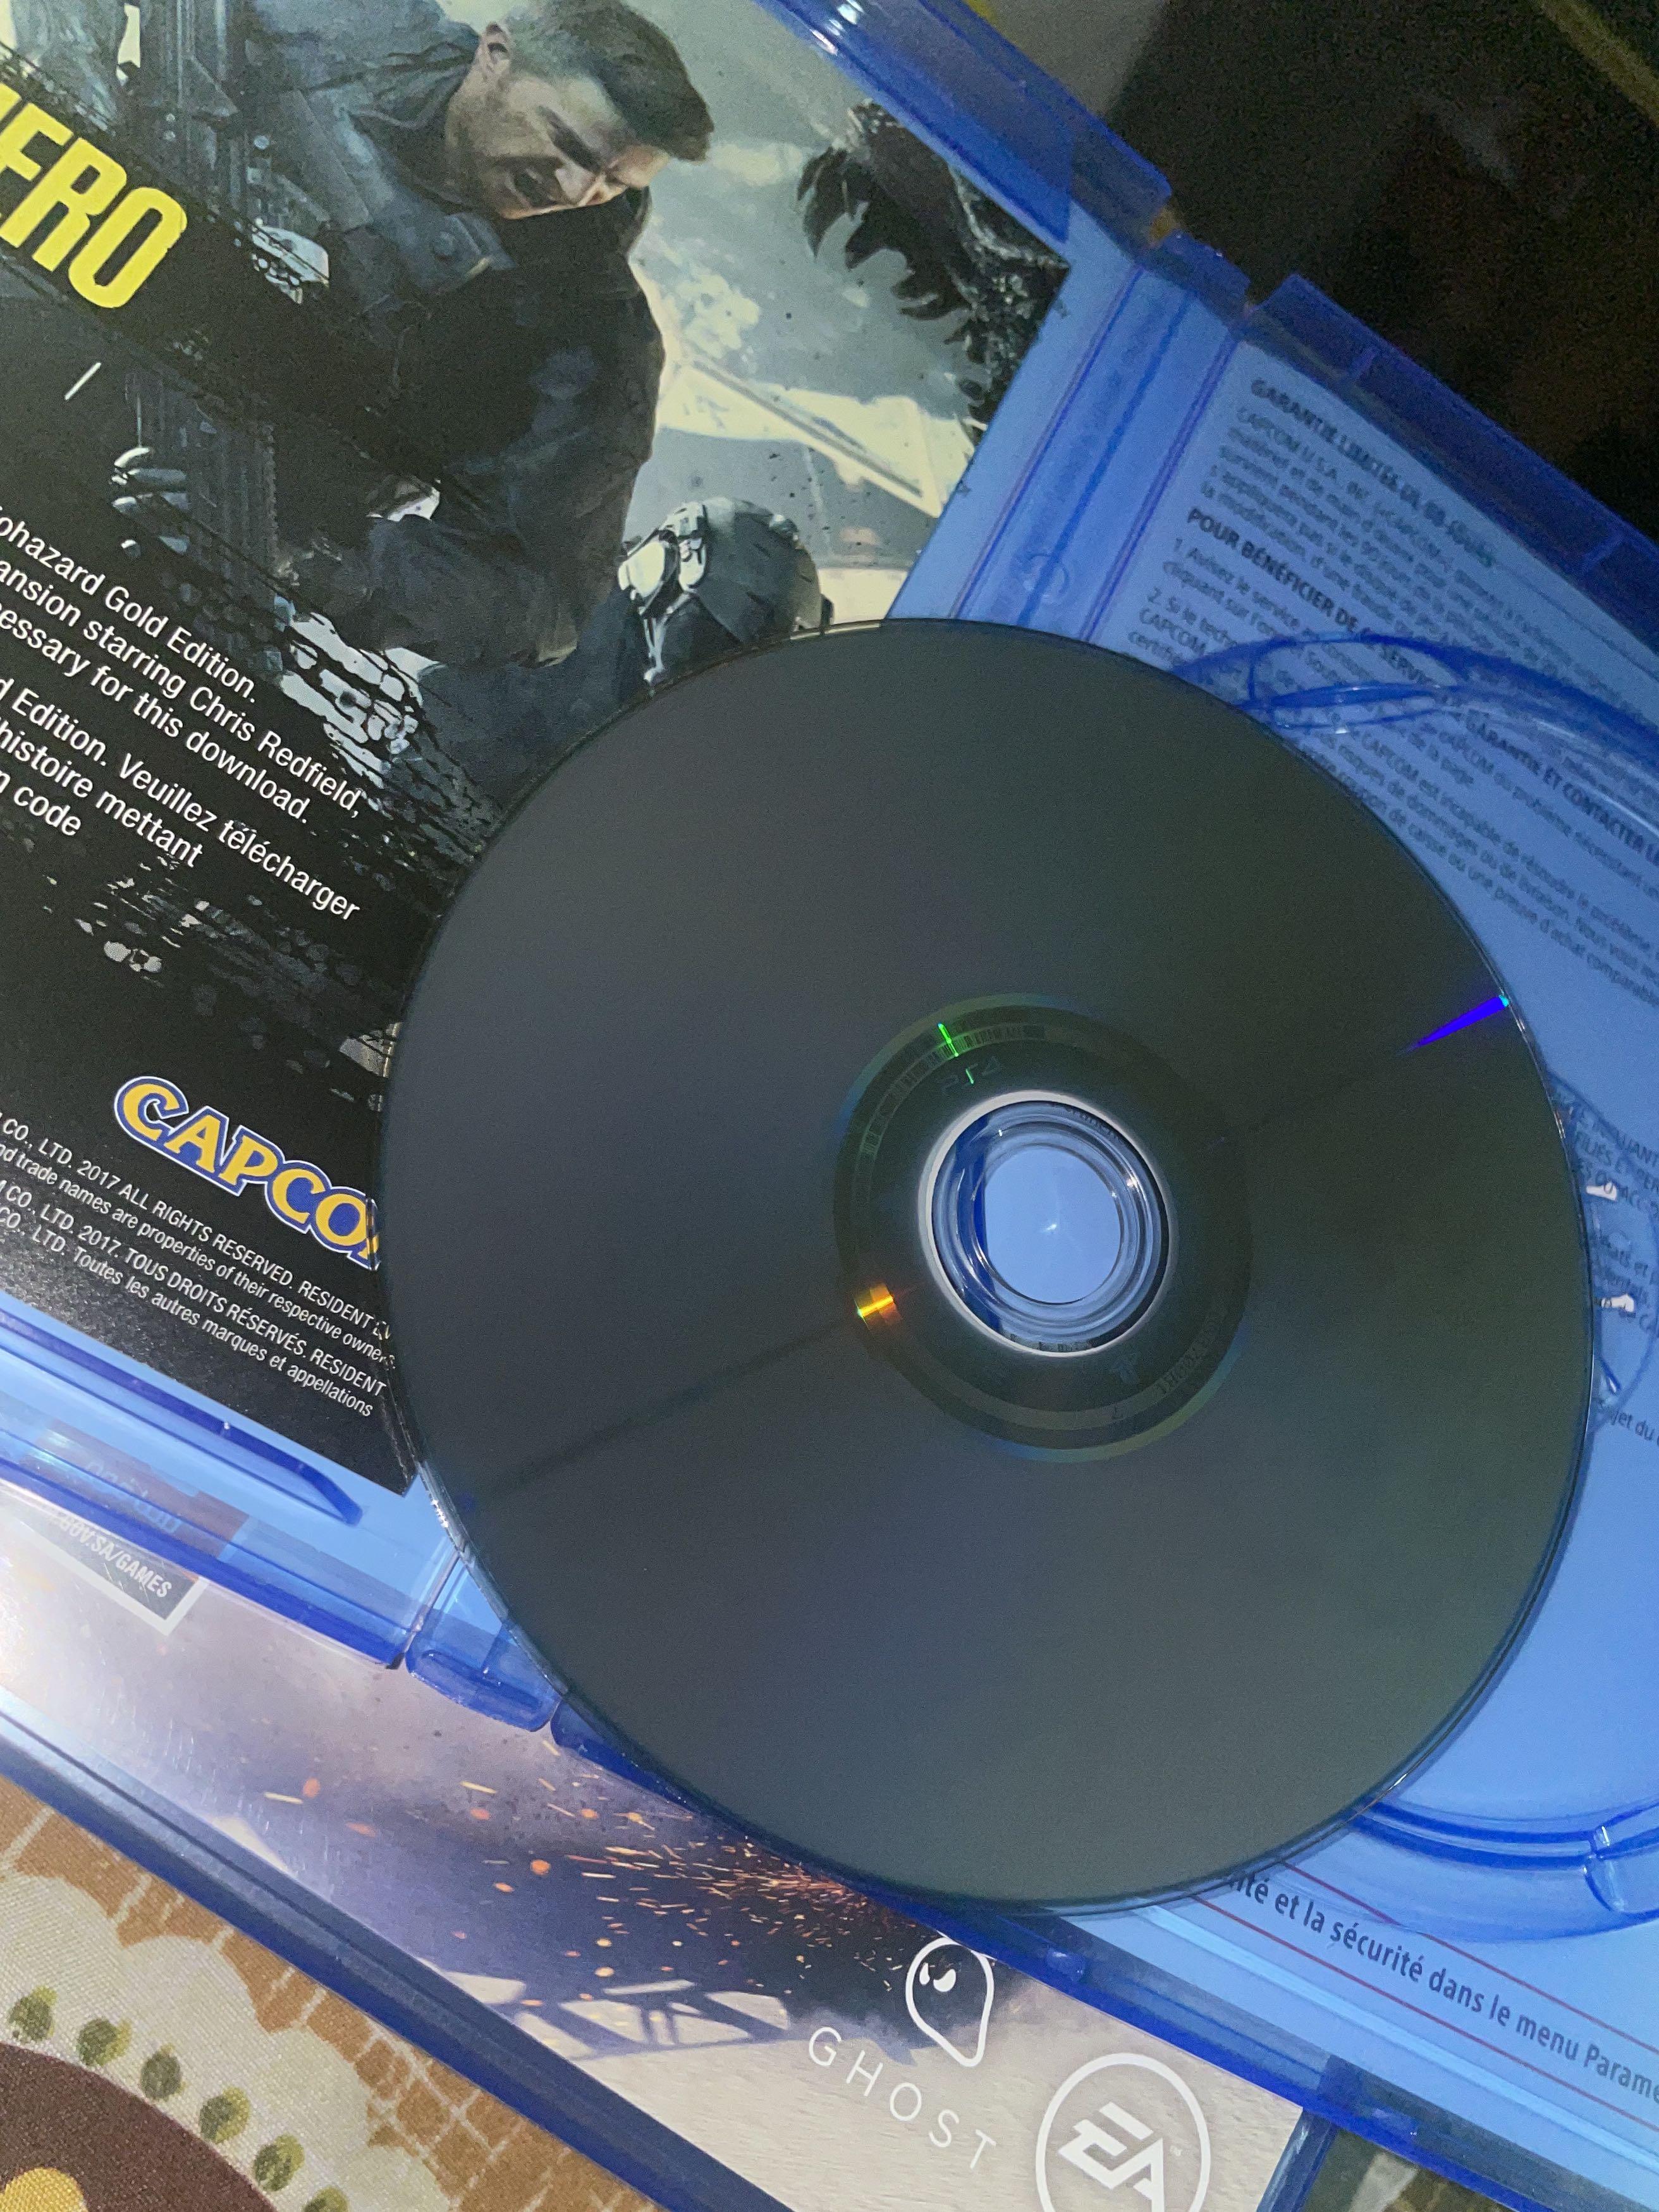 Resident Evil 7 Biohazard Gold Edition PlayStation 4, PlayStation 5 56040 -  Best Buy